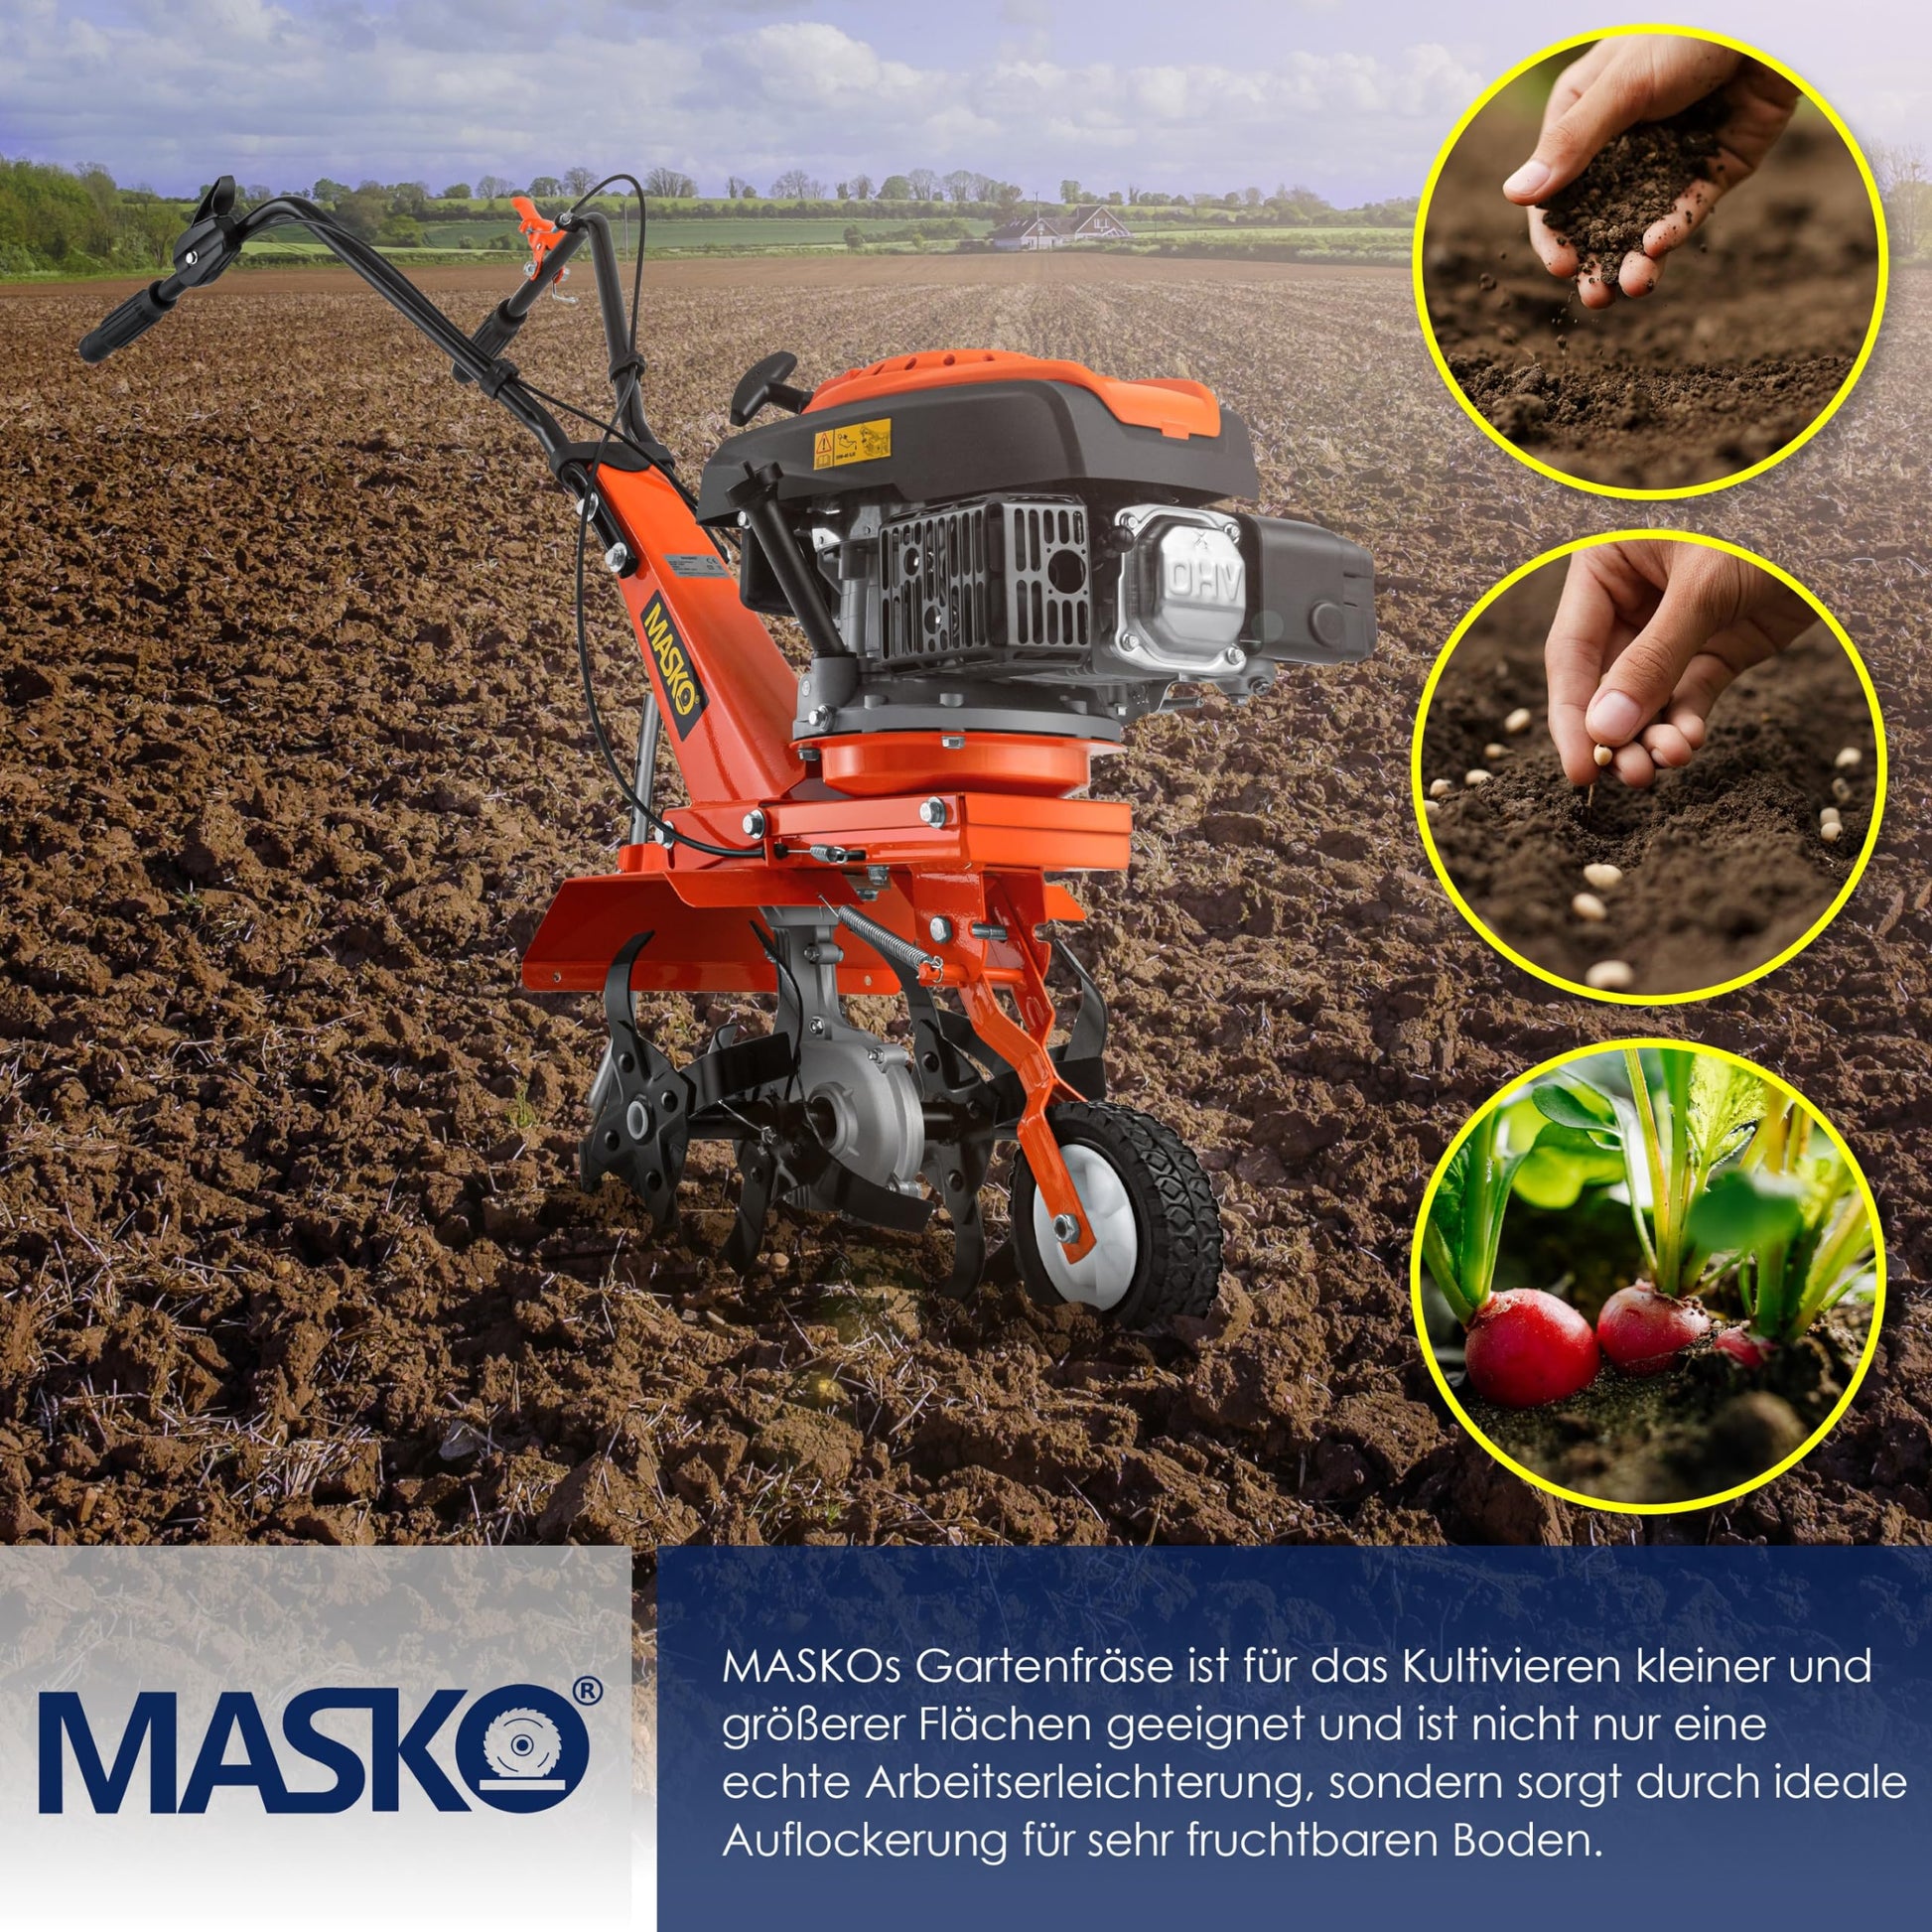 MASKO® MK-909 Fresa a scoppio 2.2 kW (3PS) 139ccm